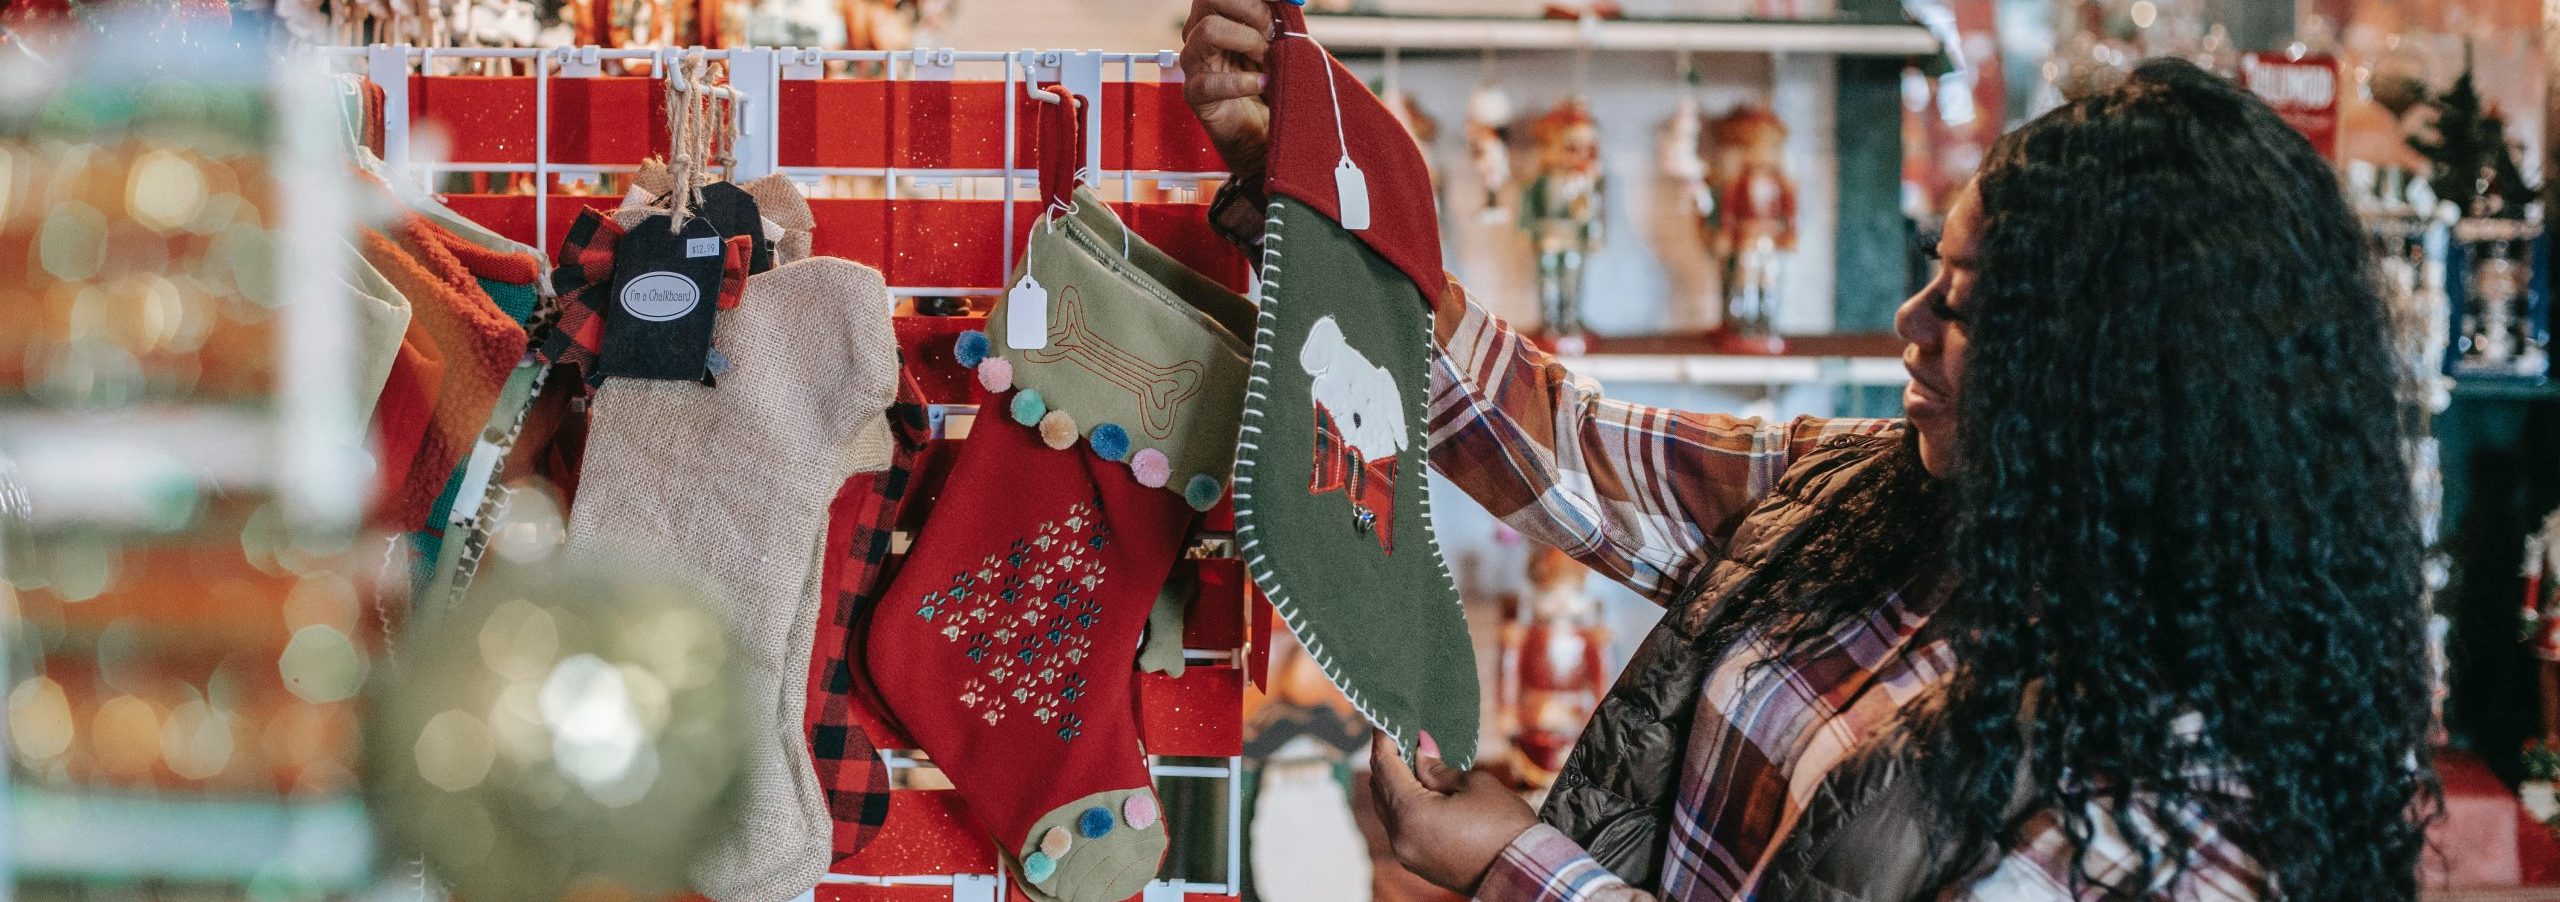 Woman buying christmas stuff and overspending on Holidays